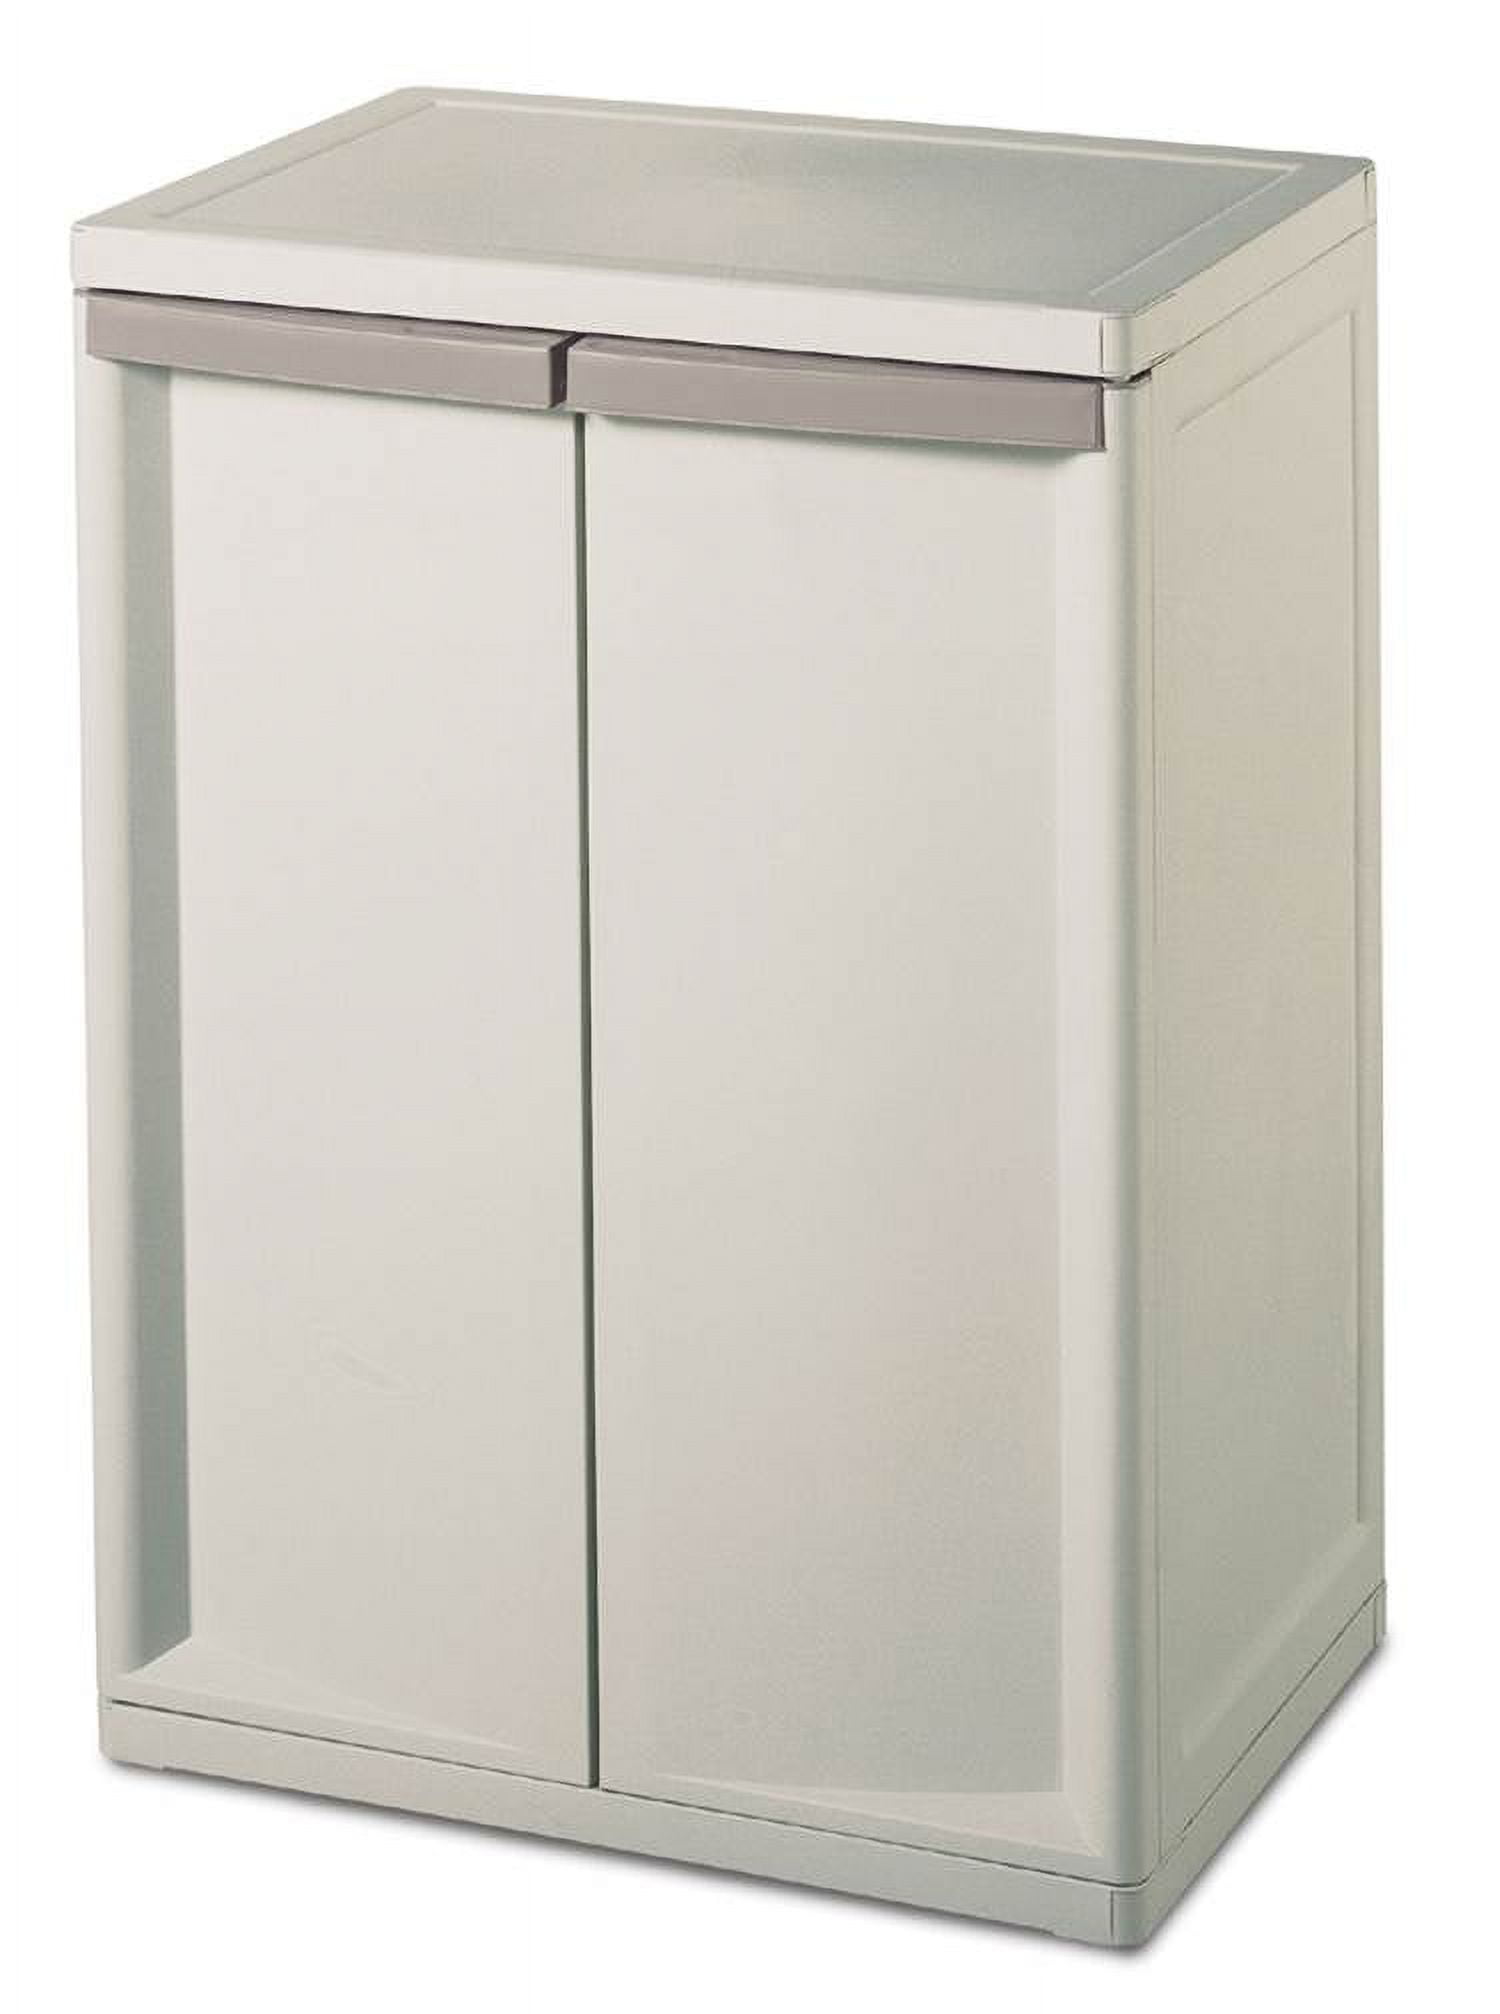 Sterilite Adjustable 4-Shelf Gray Storage Cabinet with Doors